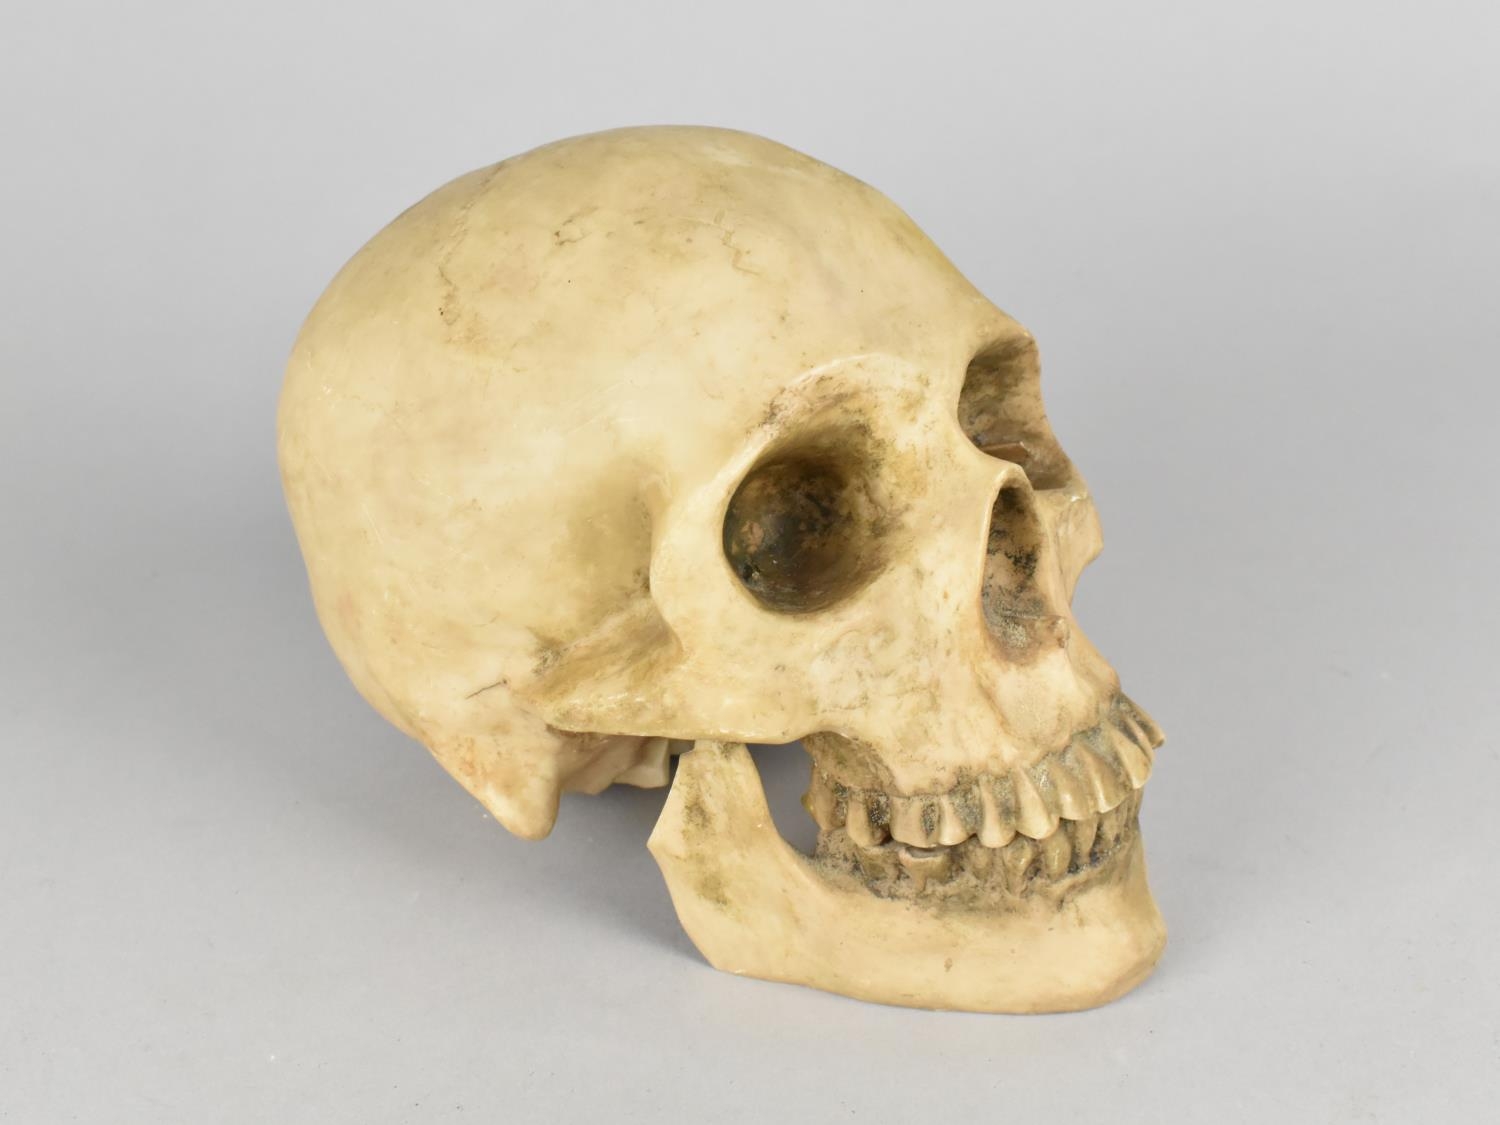 A Cast Resin Study of a Human Skull, Perhaps Teaching Aid, 18cms Long